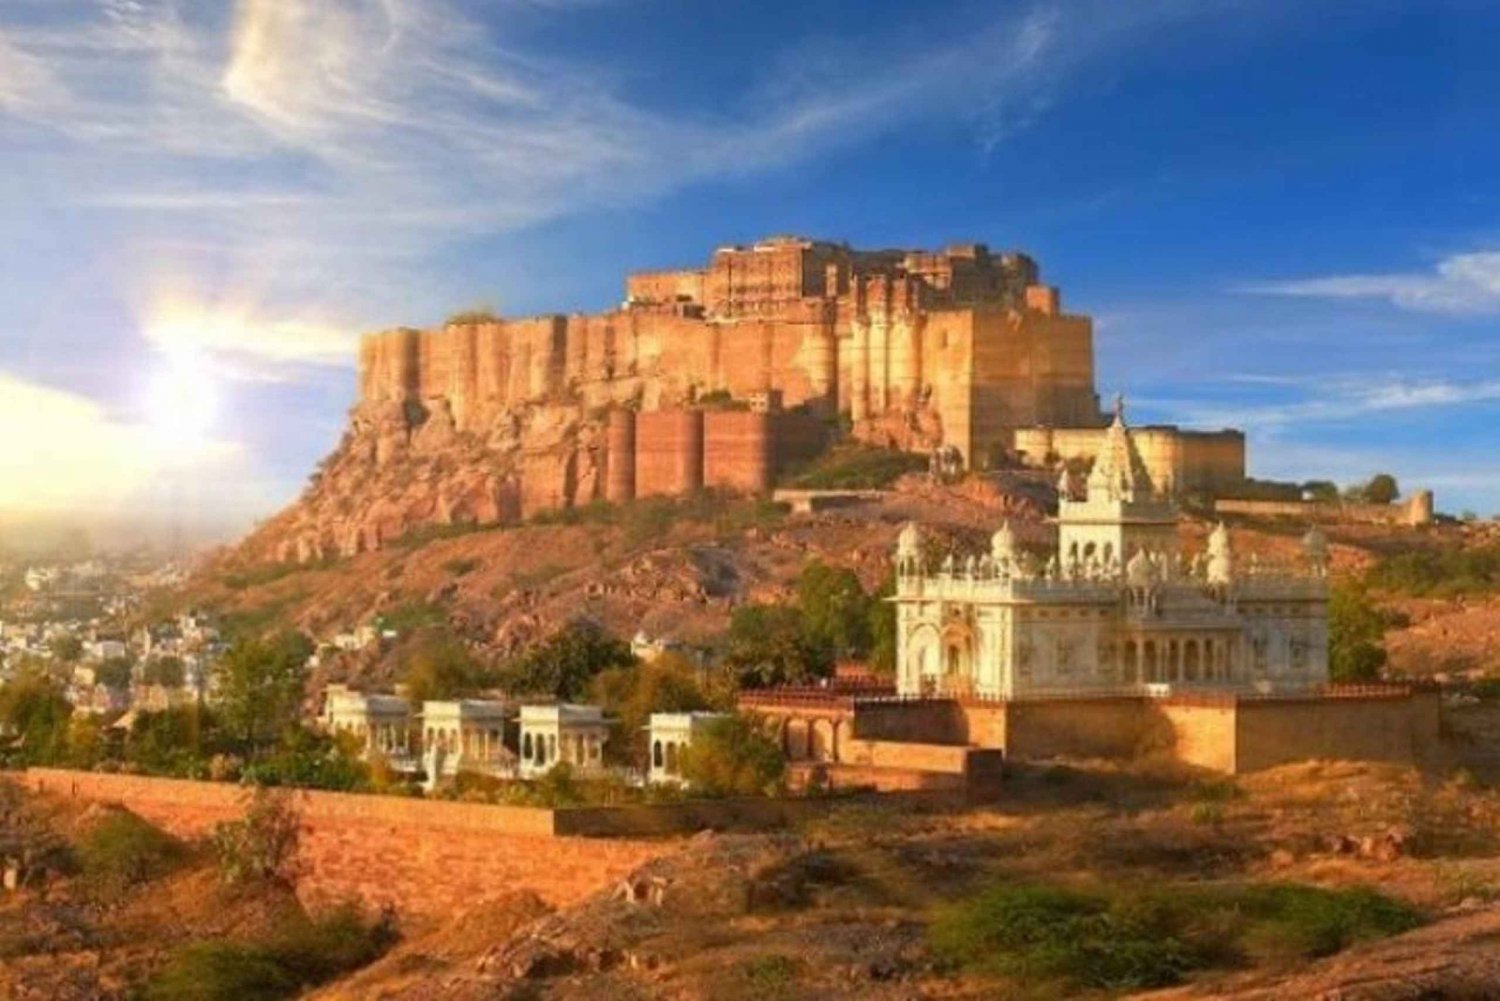 Transfer from Jodhpur to Jaisalmer